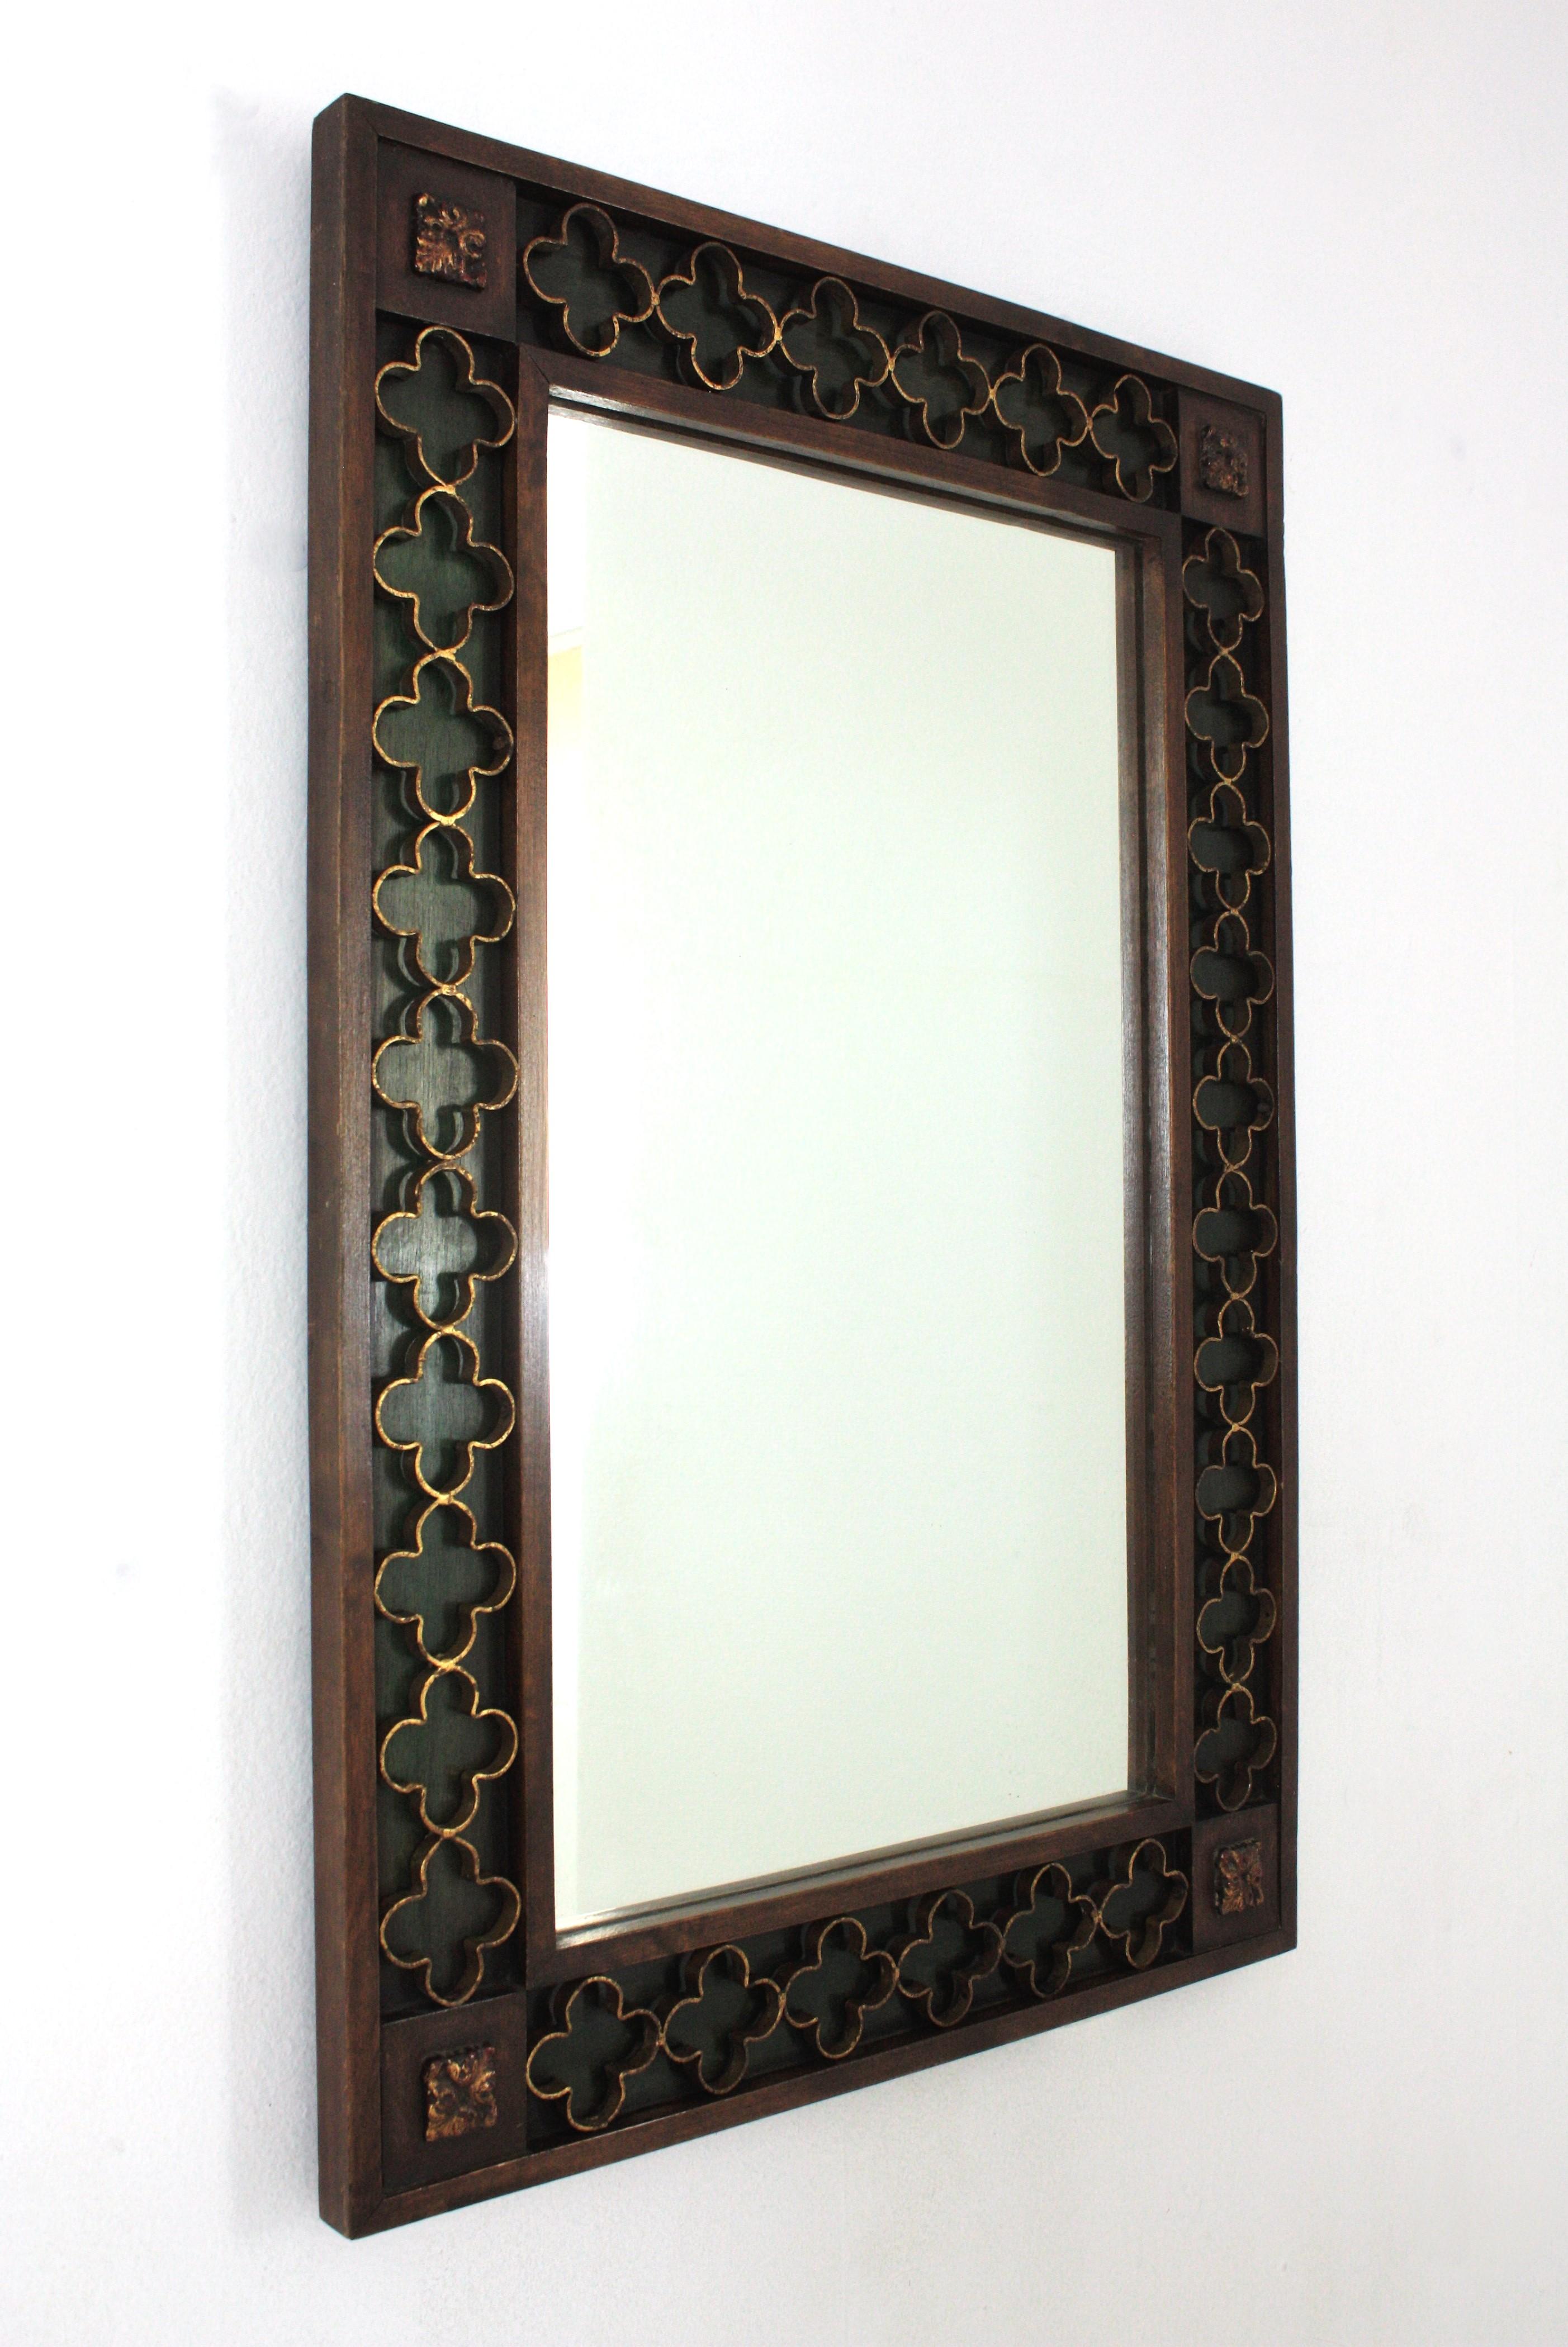 20th Century Spanish Revival Rectangular Mirror with Gilt Iron Rosettes Frame